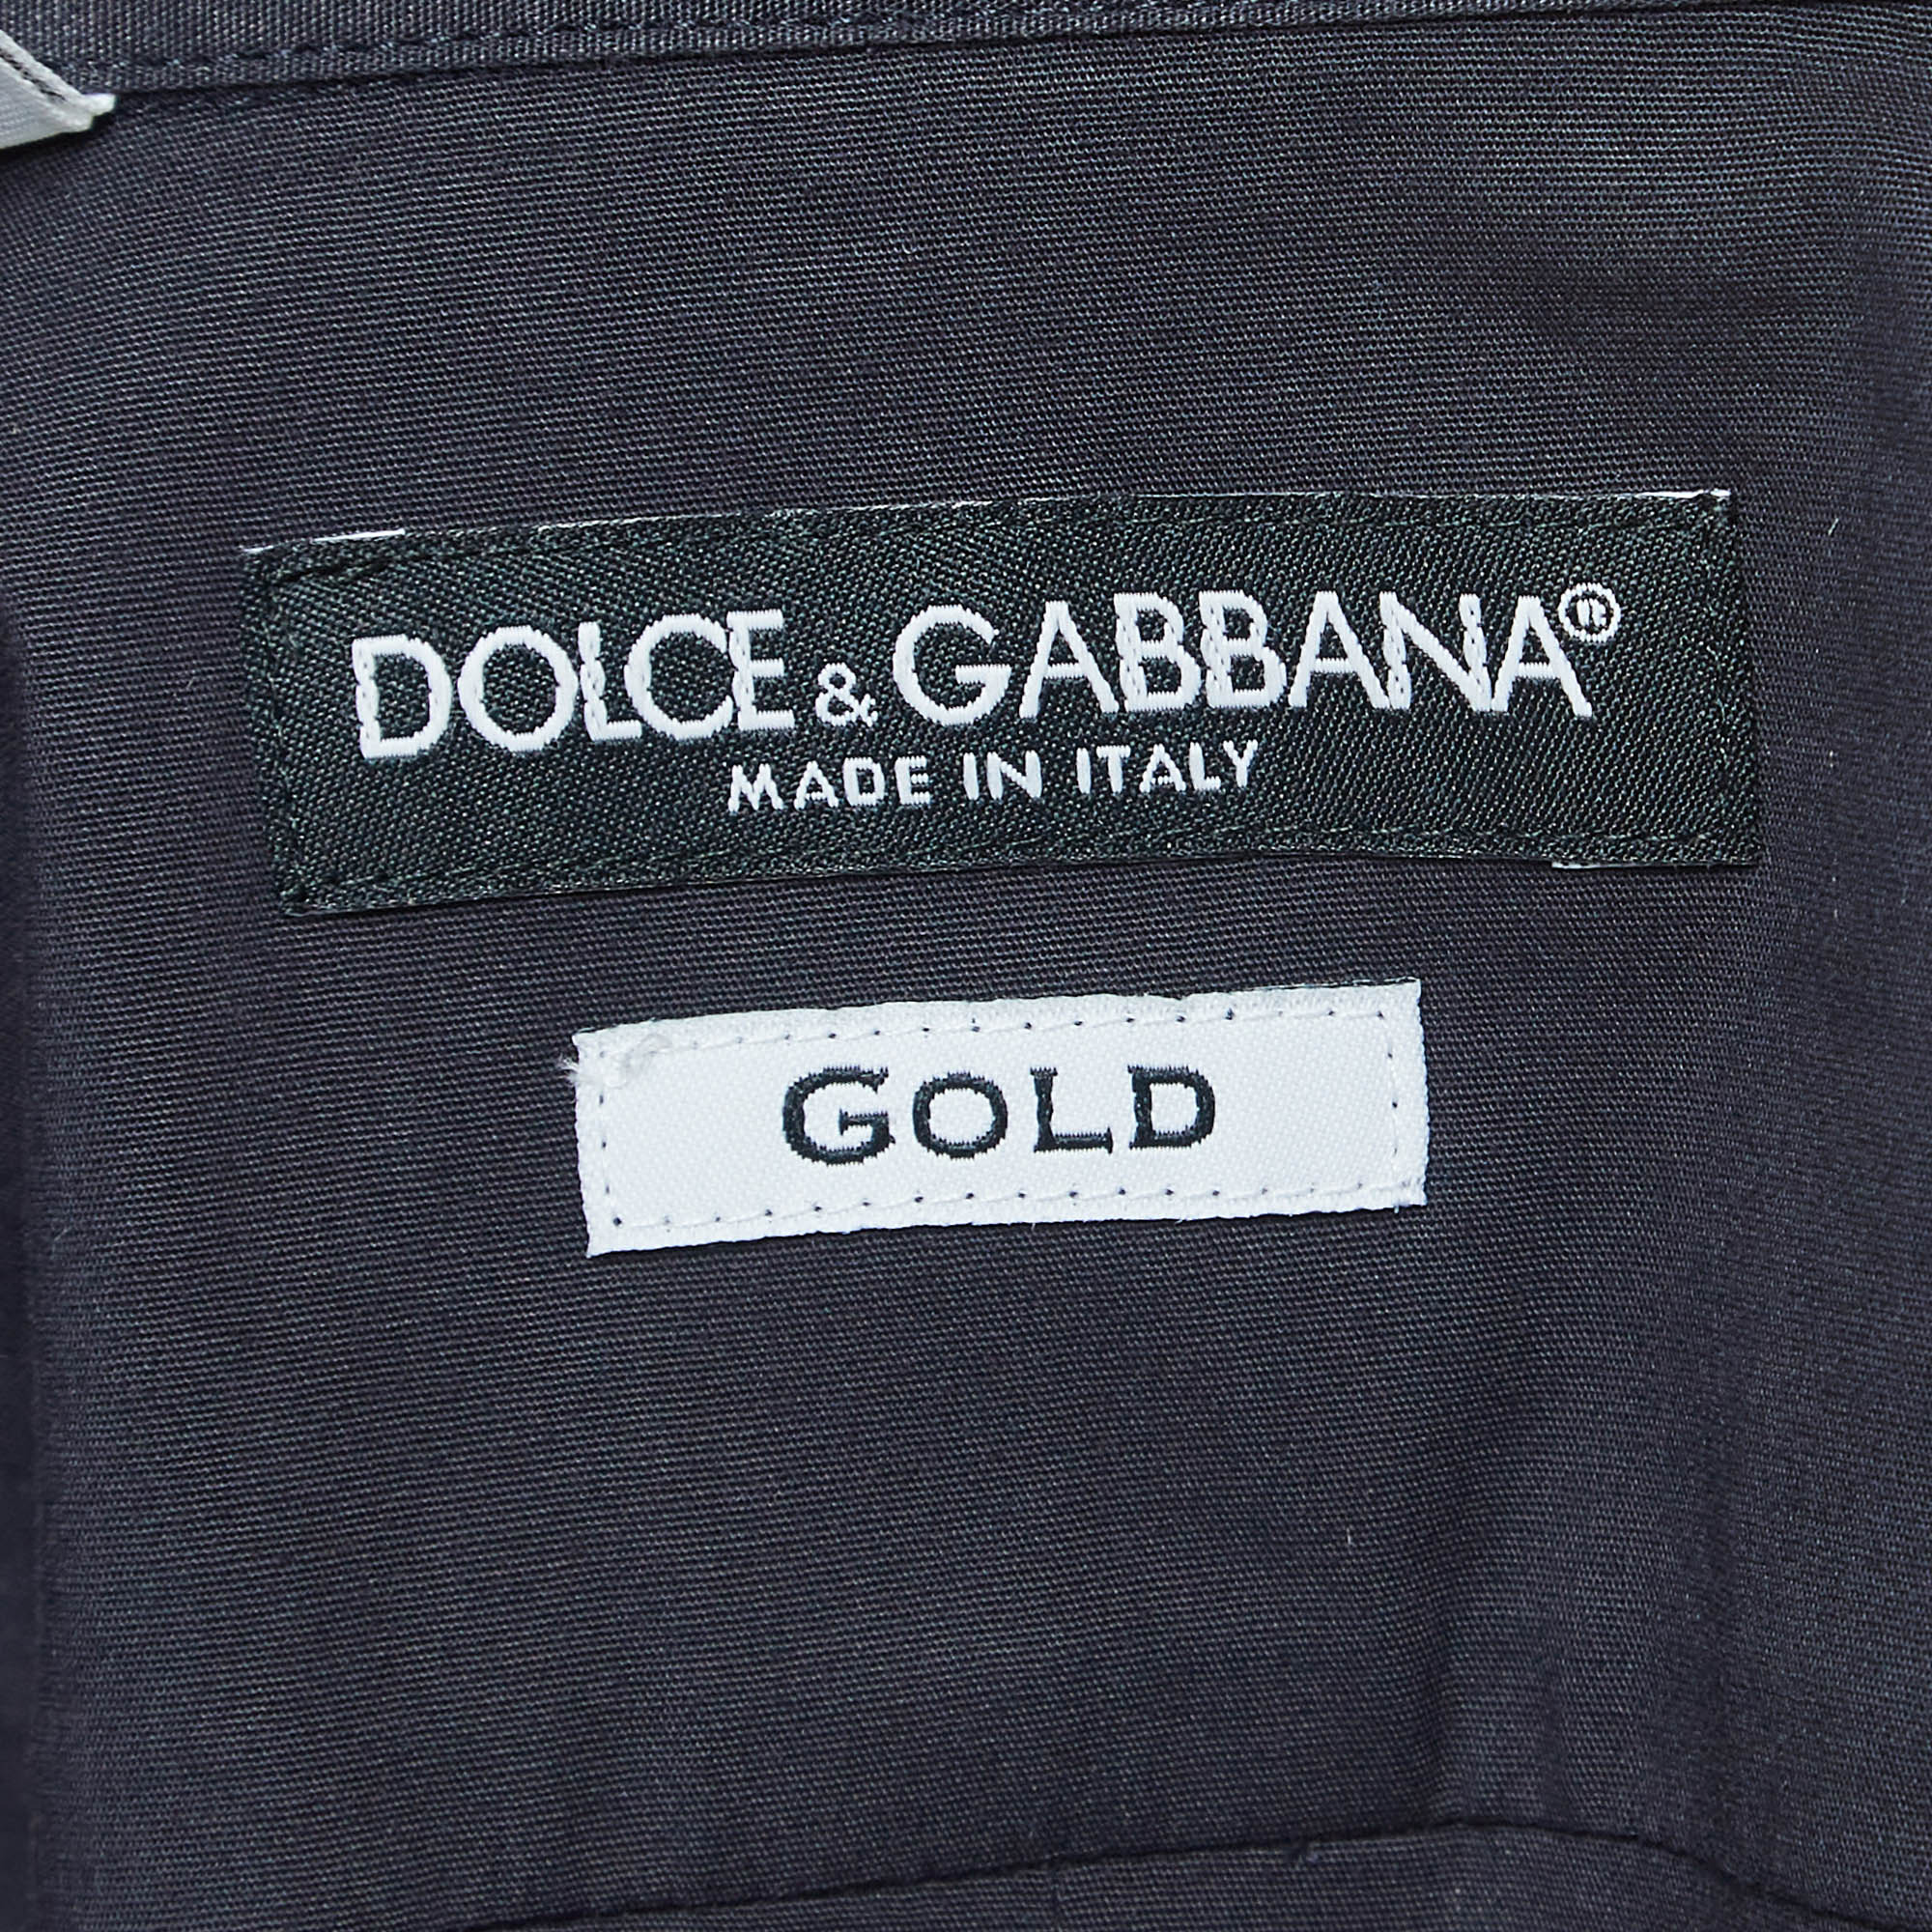 Dolce & Gabbana Gold Navy Blue Cotton Button Front Full Sleeve Shirt S